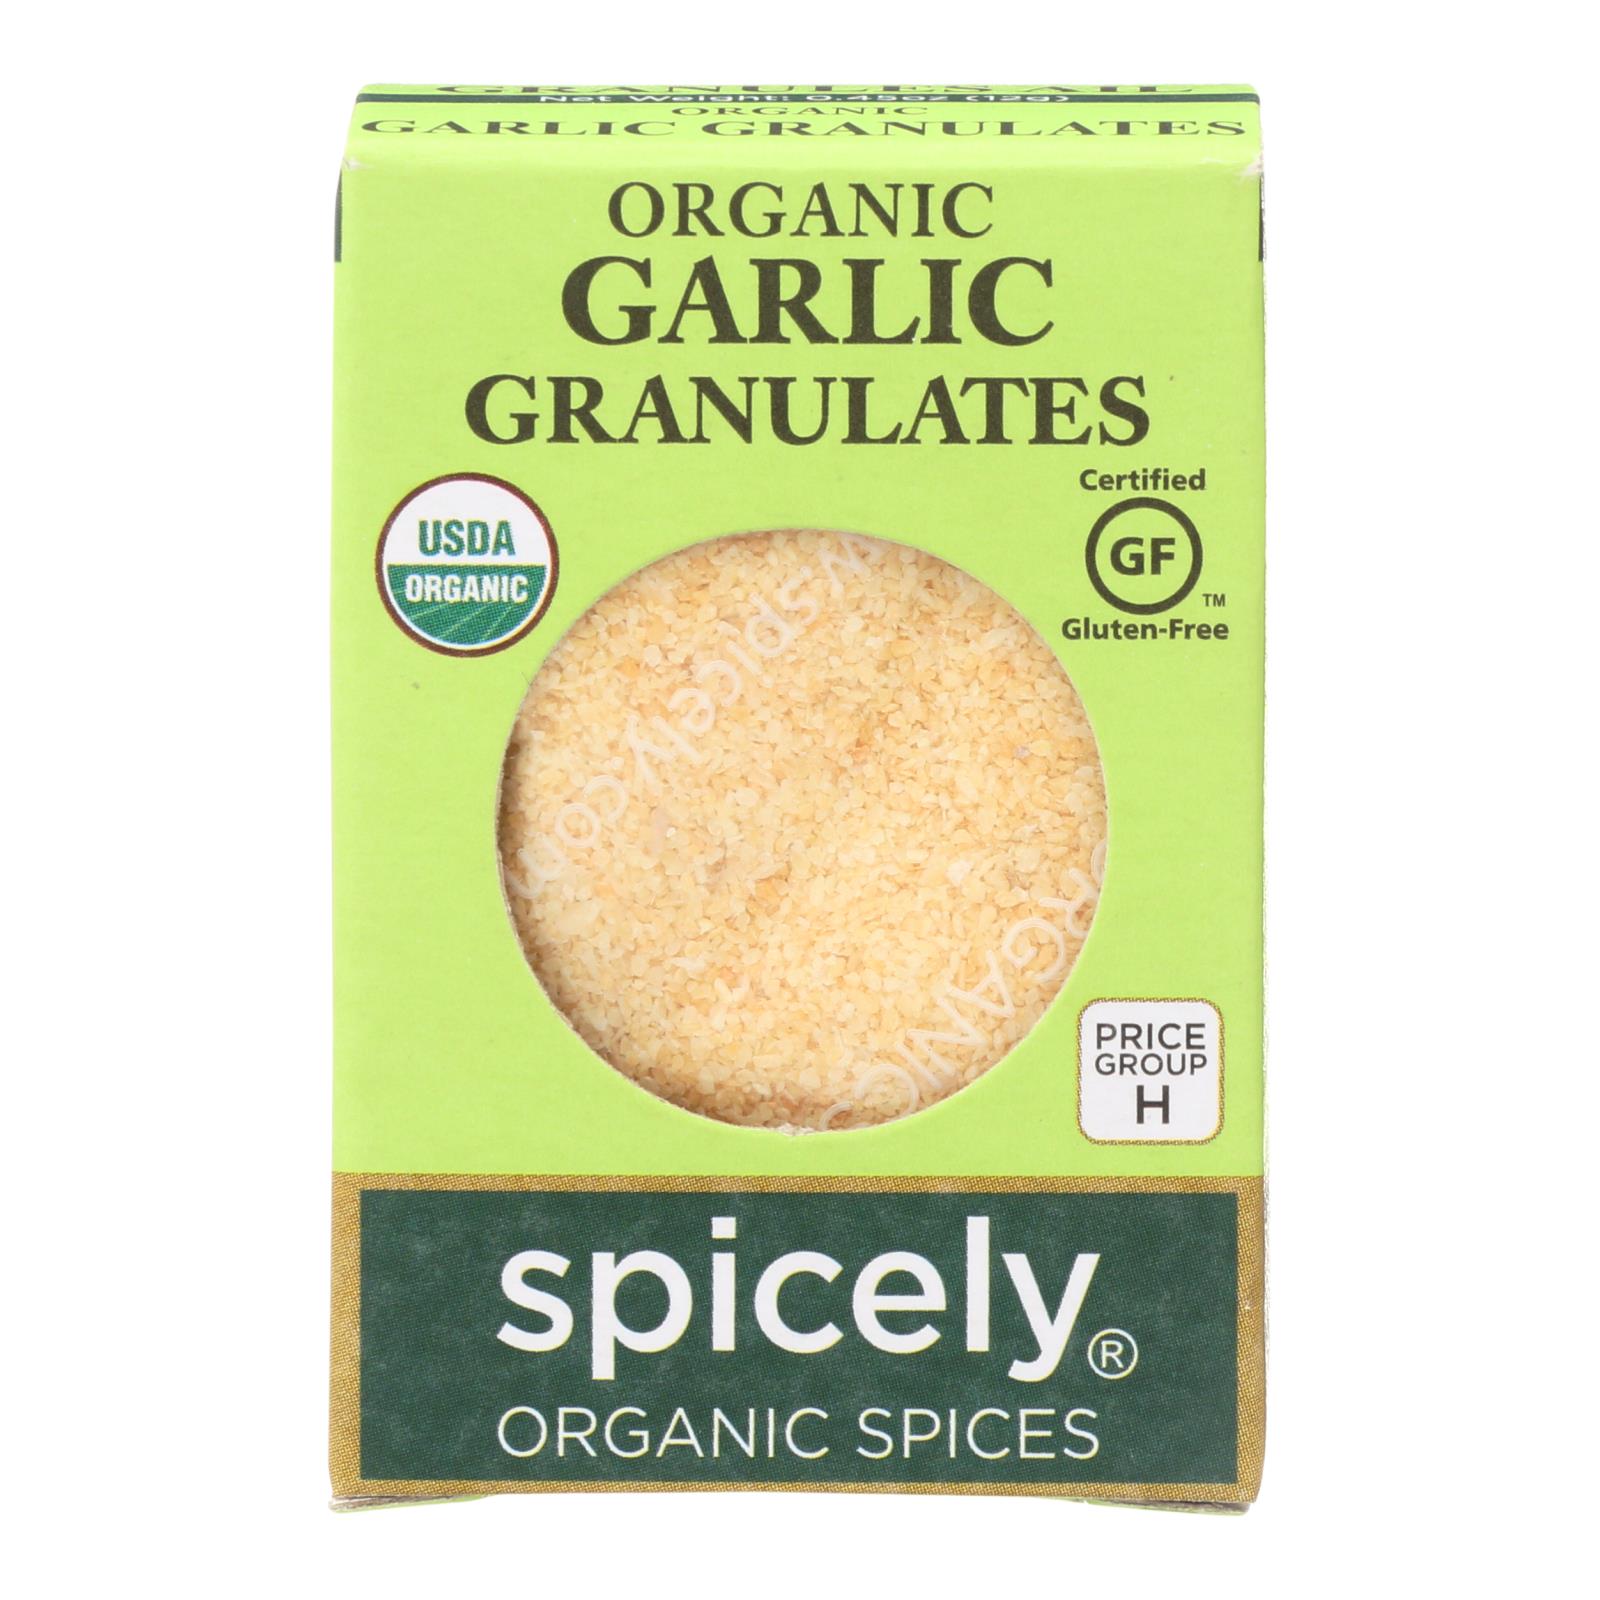 Spicely Organics - Organic Garlic Granulates - 6개 묶음상품 - 0.45 oz.